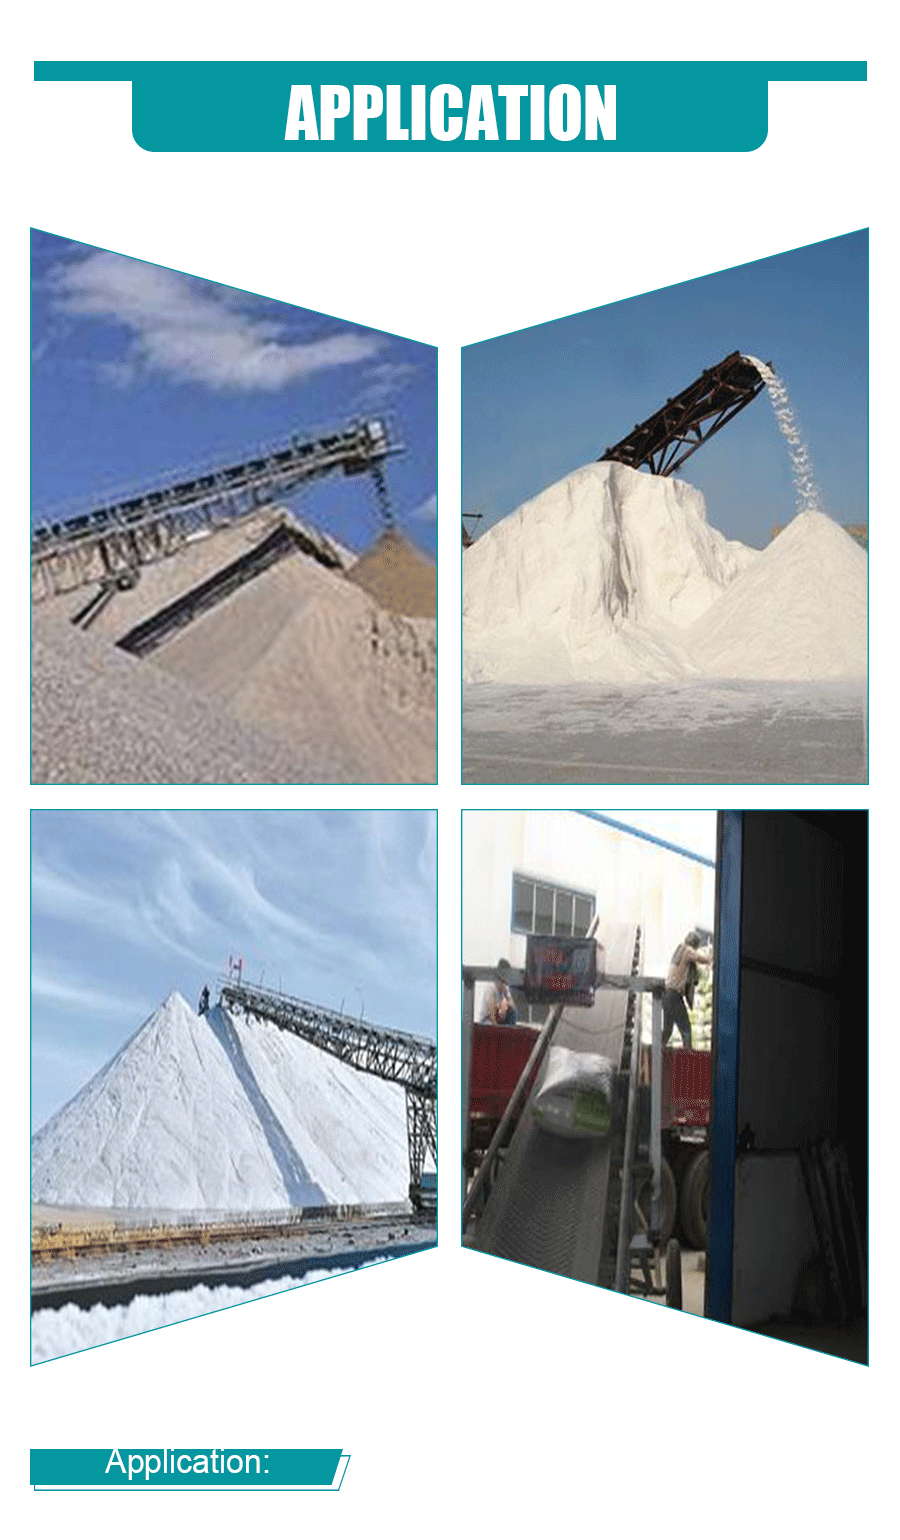 Conveyor belts for Fertilizers